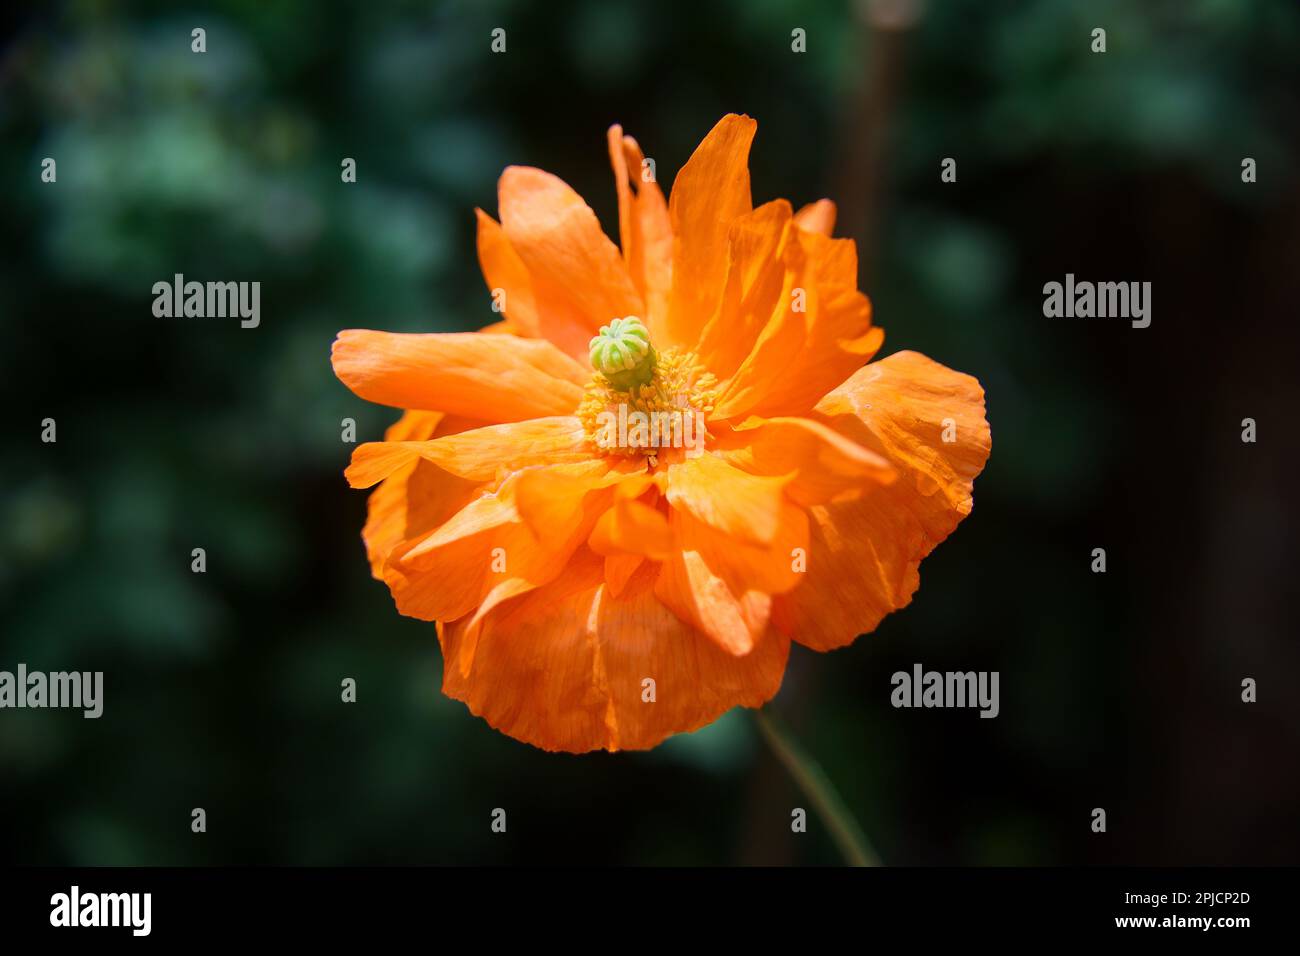 Fiery orange poppy contrasted against a dark background Stock Photo